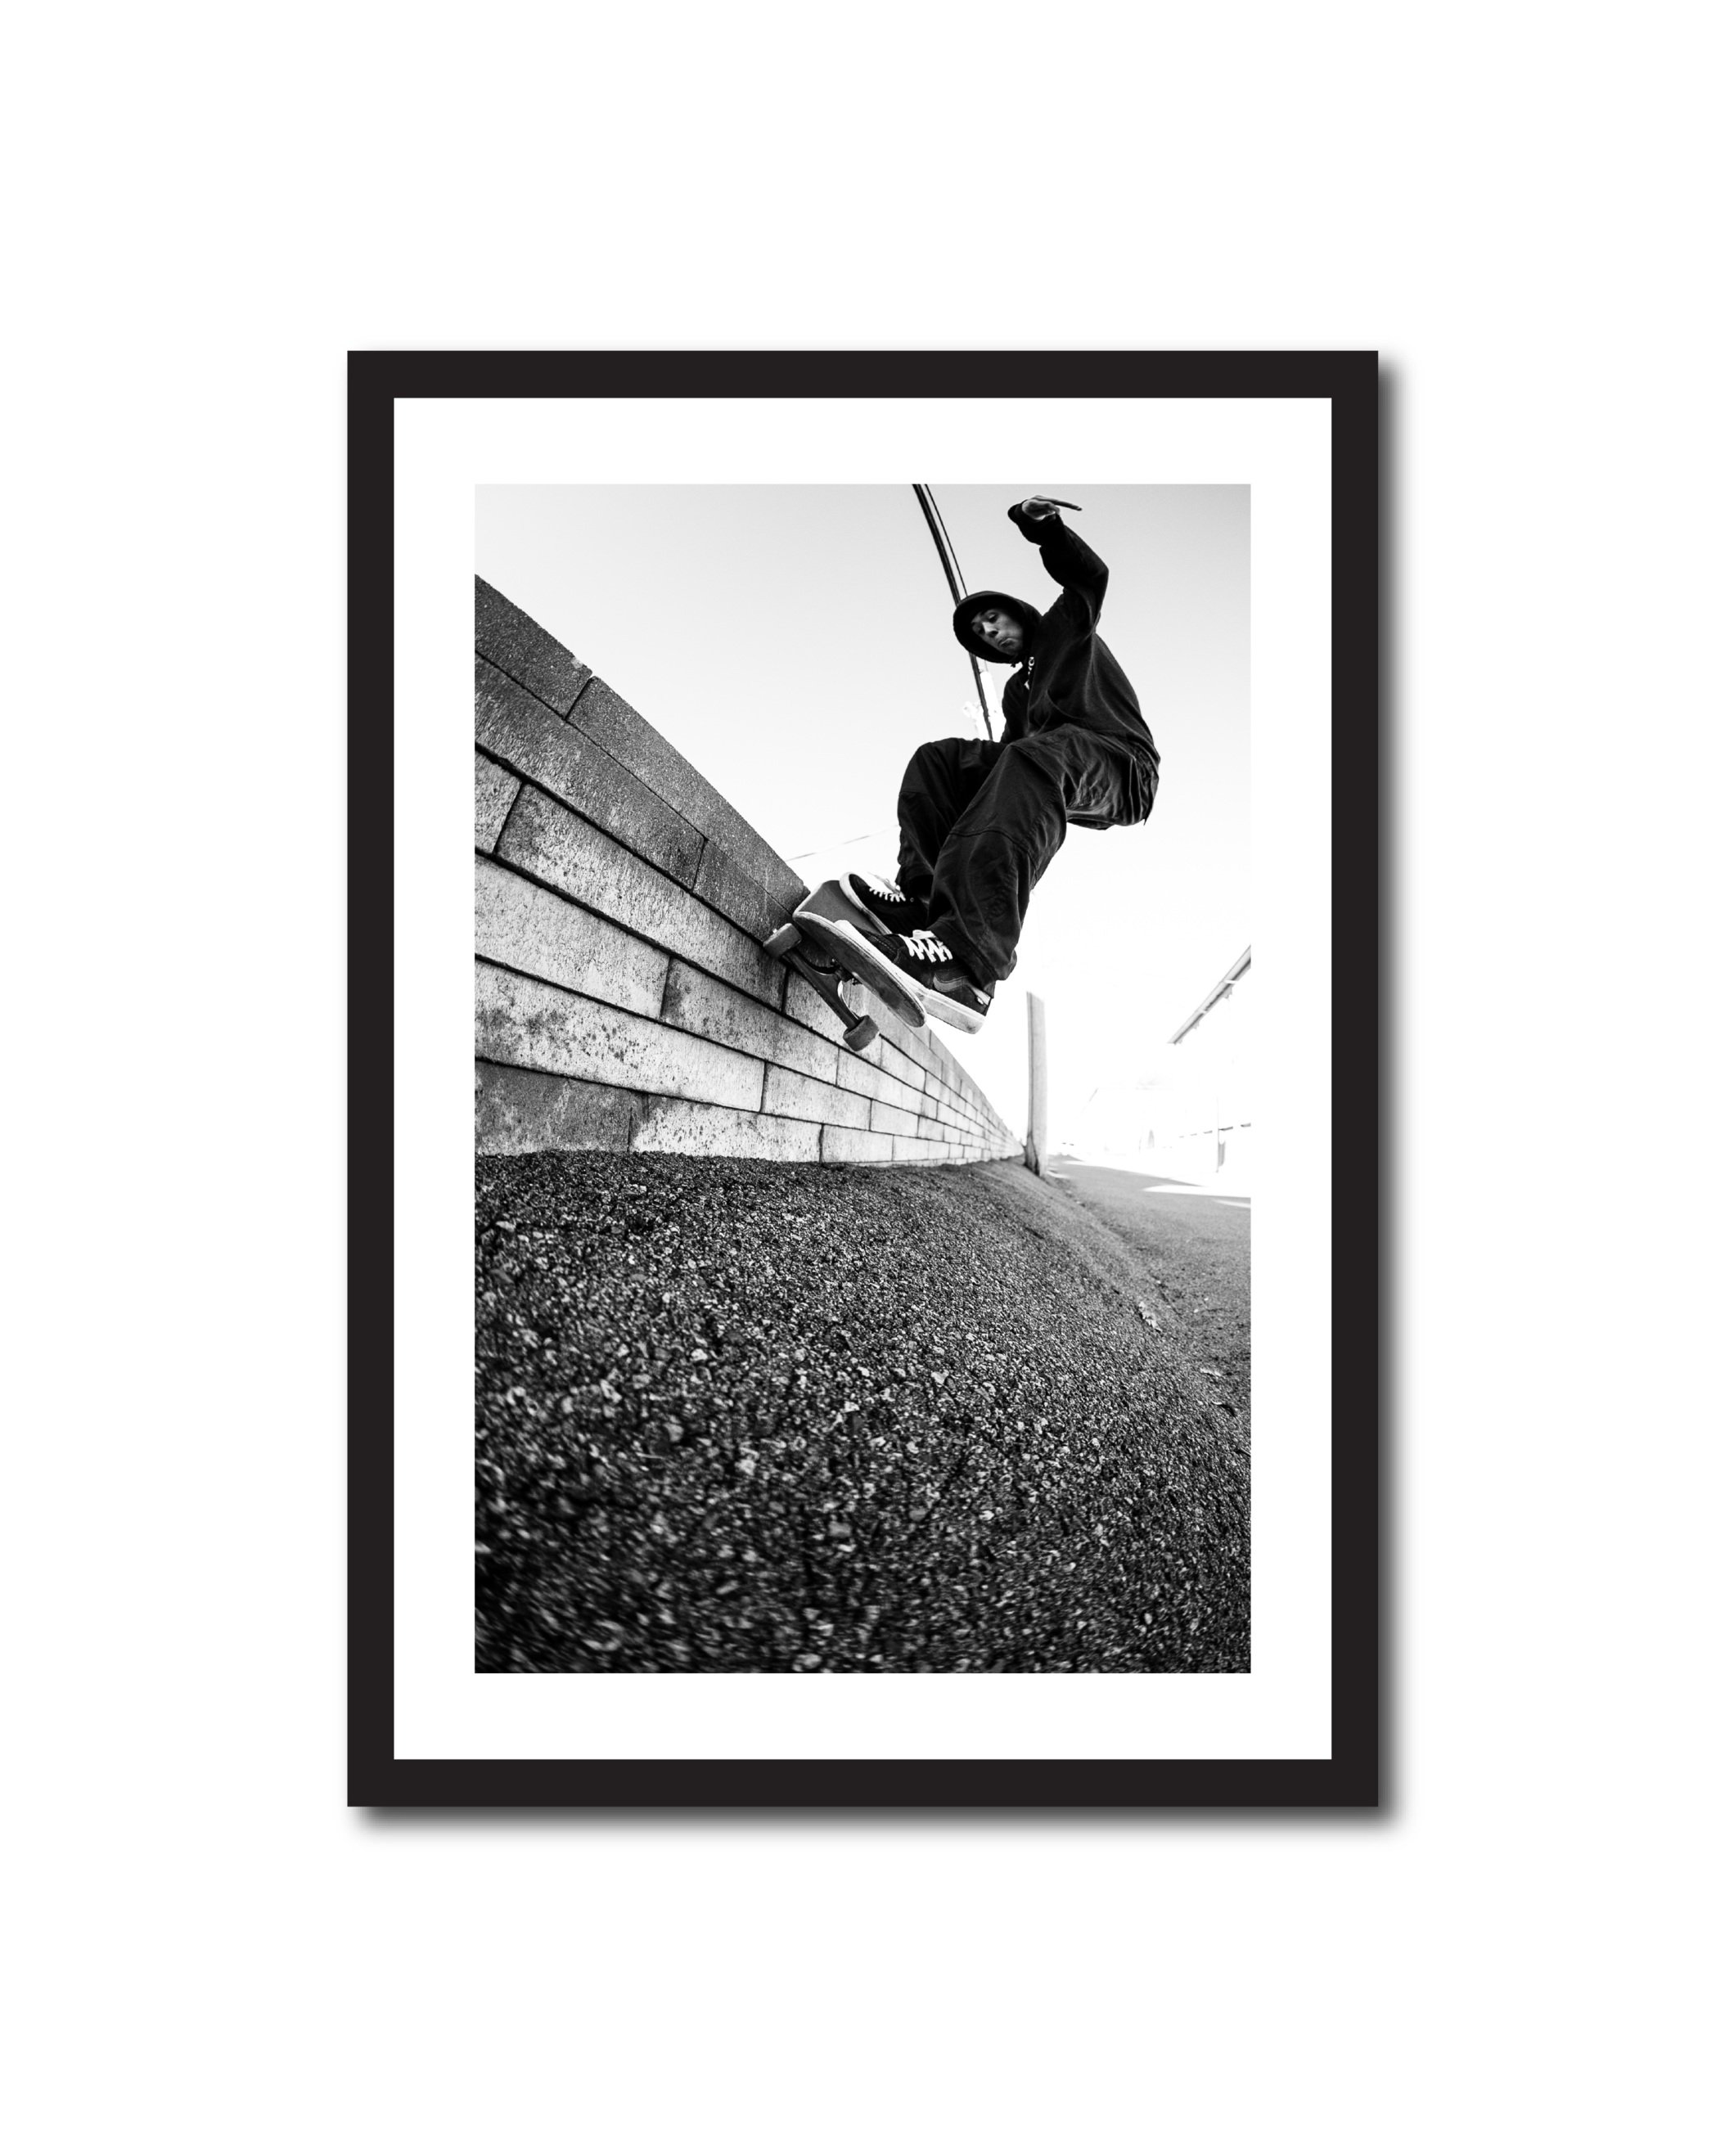 Skateboard+series+09-03.jpg